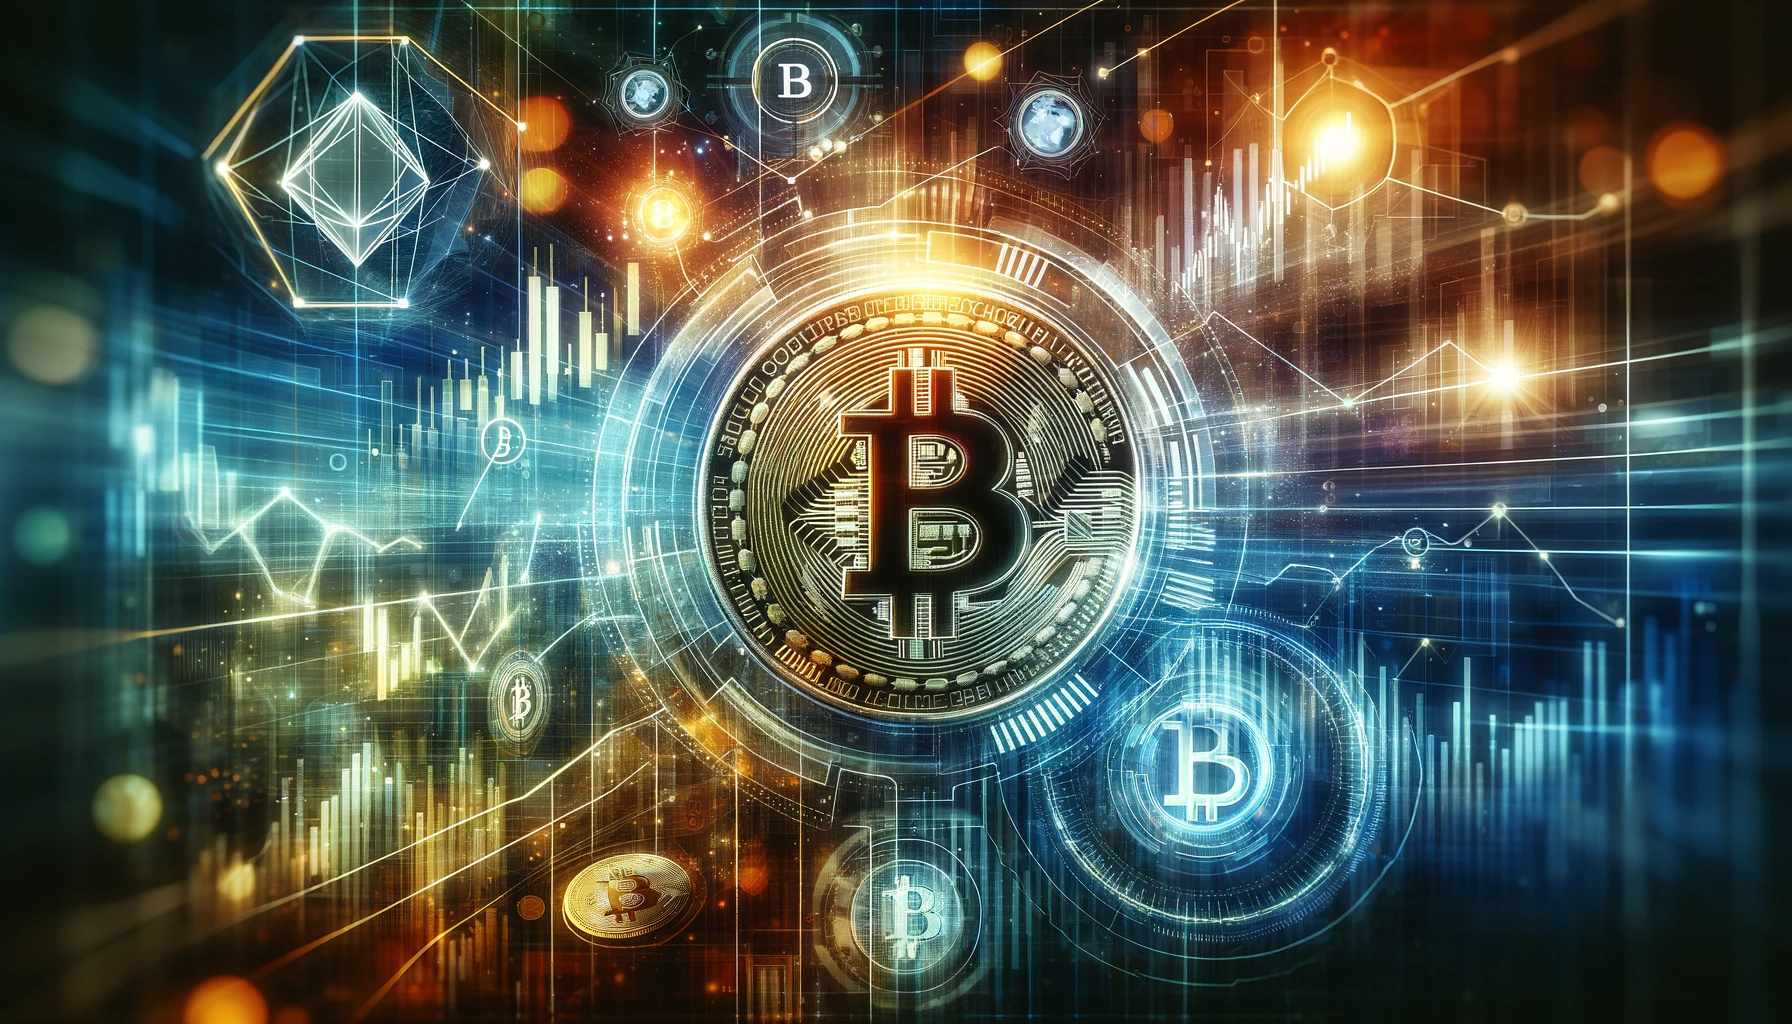 Kryptovalutan Bitcoin i fokus